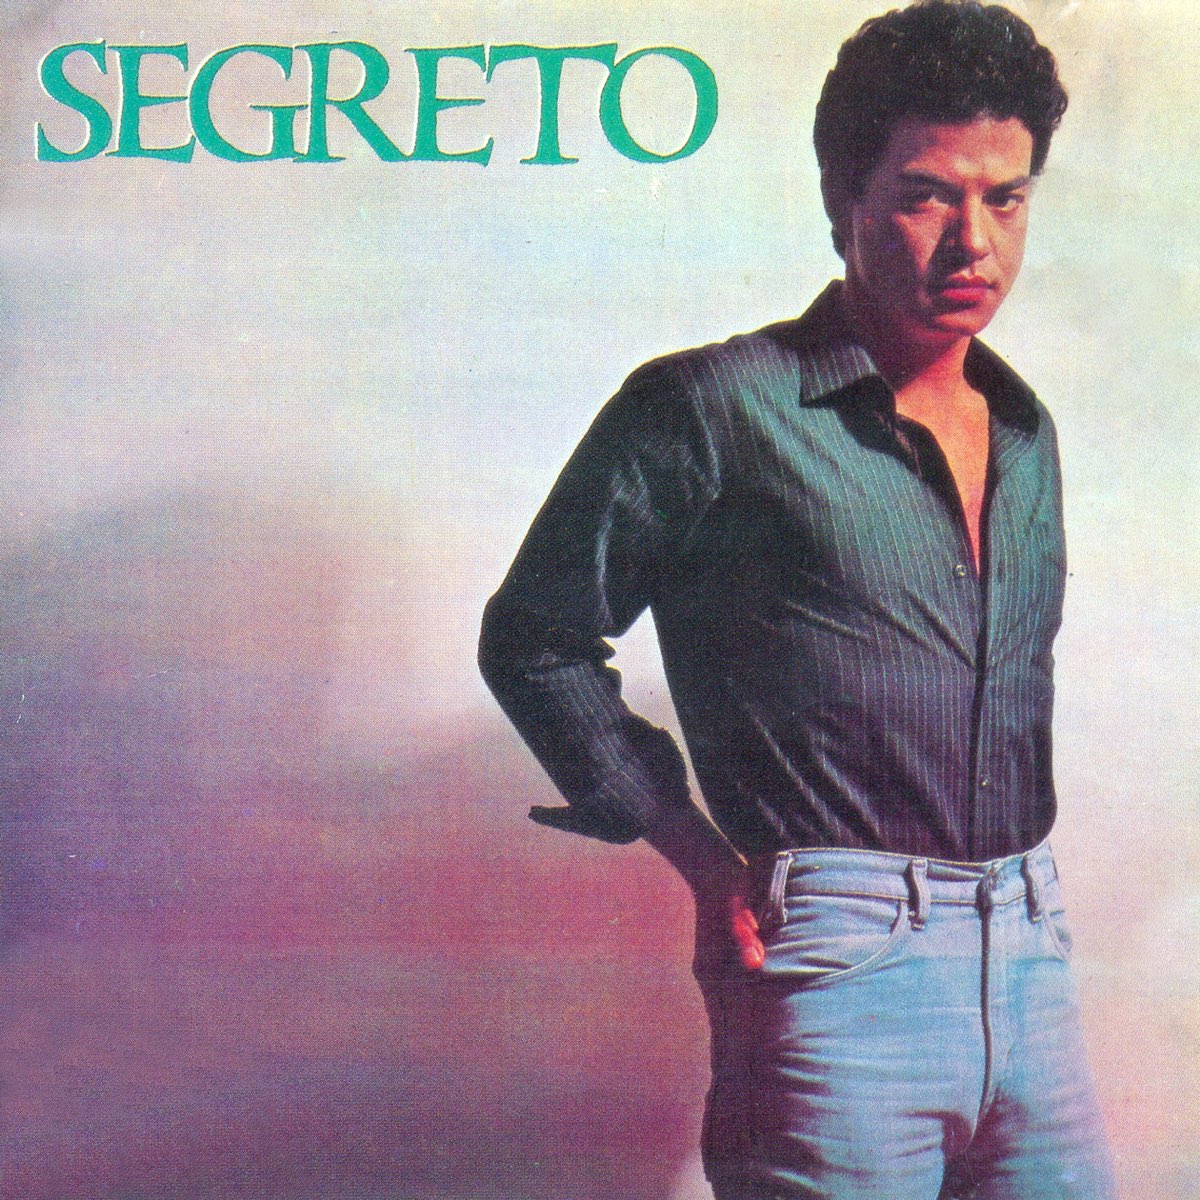 ‎Segreto by Ric Segreto on Apple Music